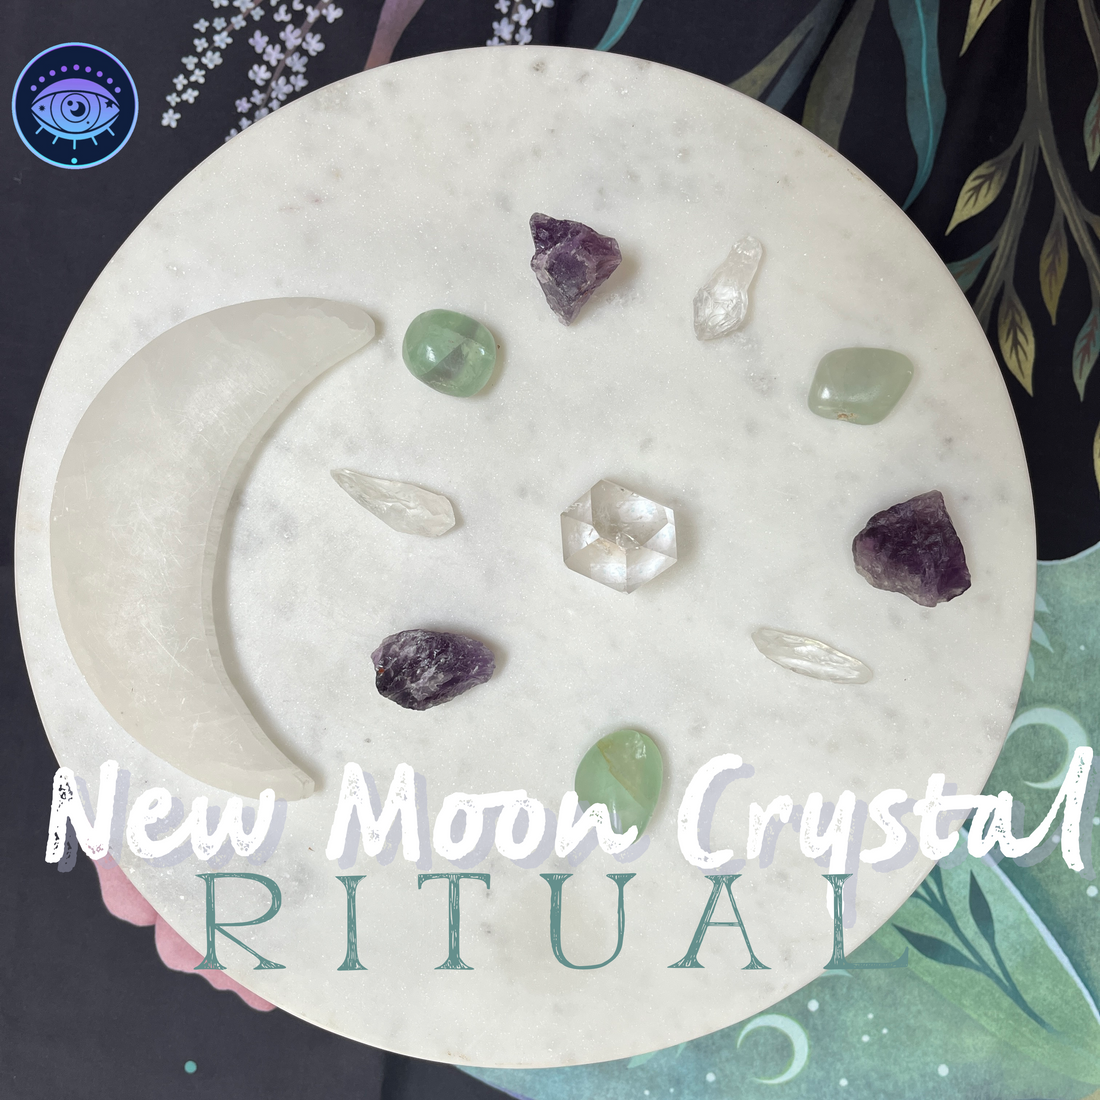 New Moon Crystal Ritual